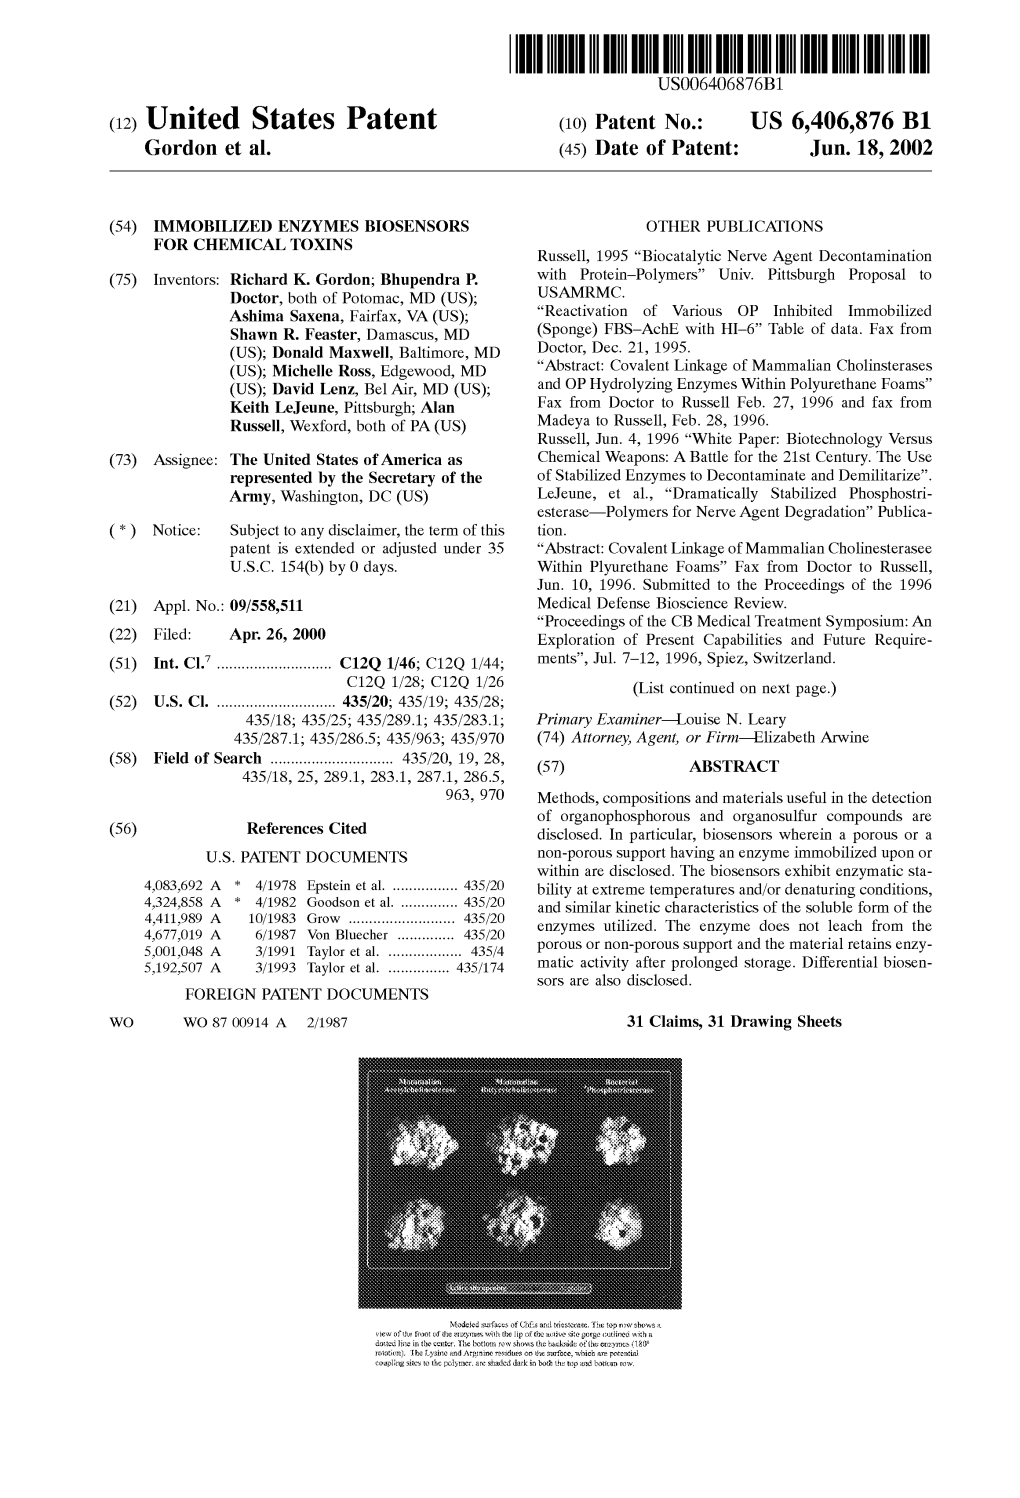 (12) United States Patent (10) Patent No.: US 6,406,876 B1 Gordon Et Al